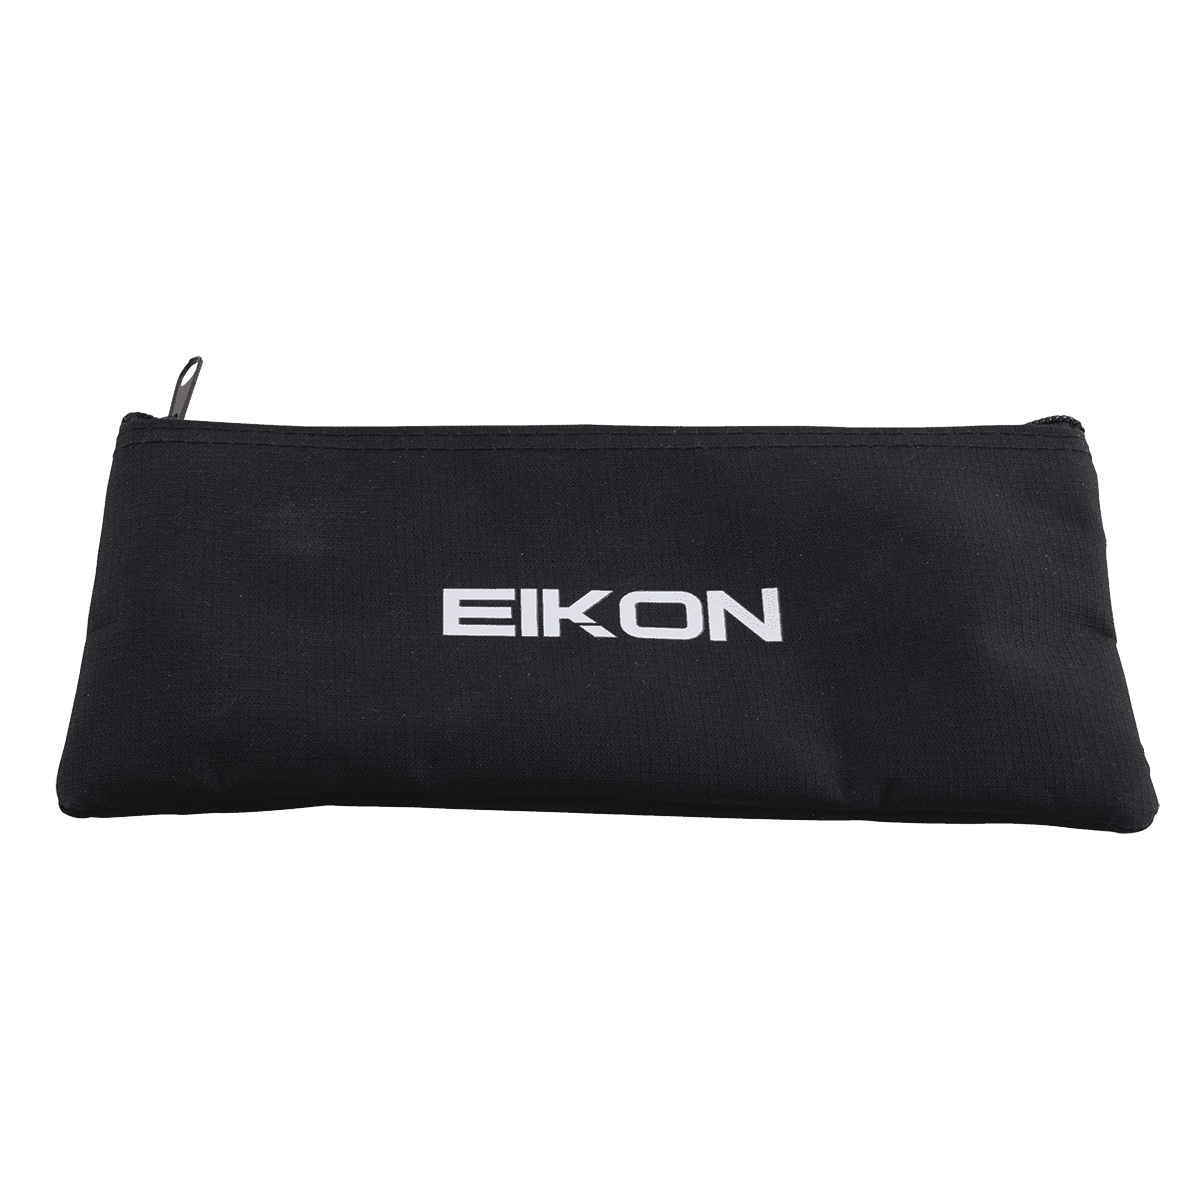 Eikon EKD7 Handheld Vocal Microphone with Bag & Clip